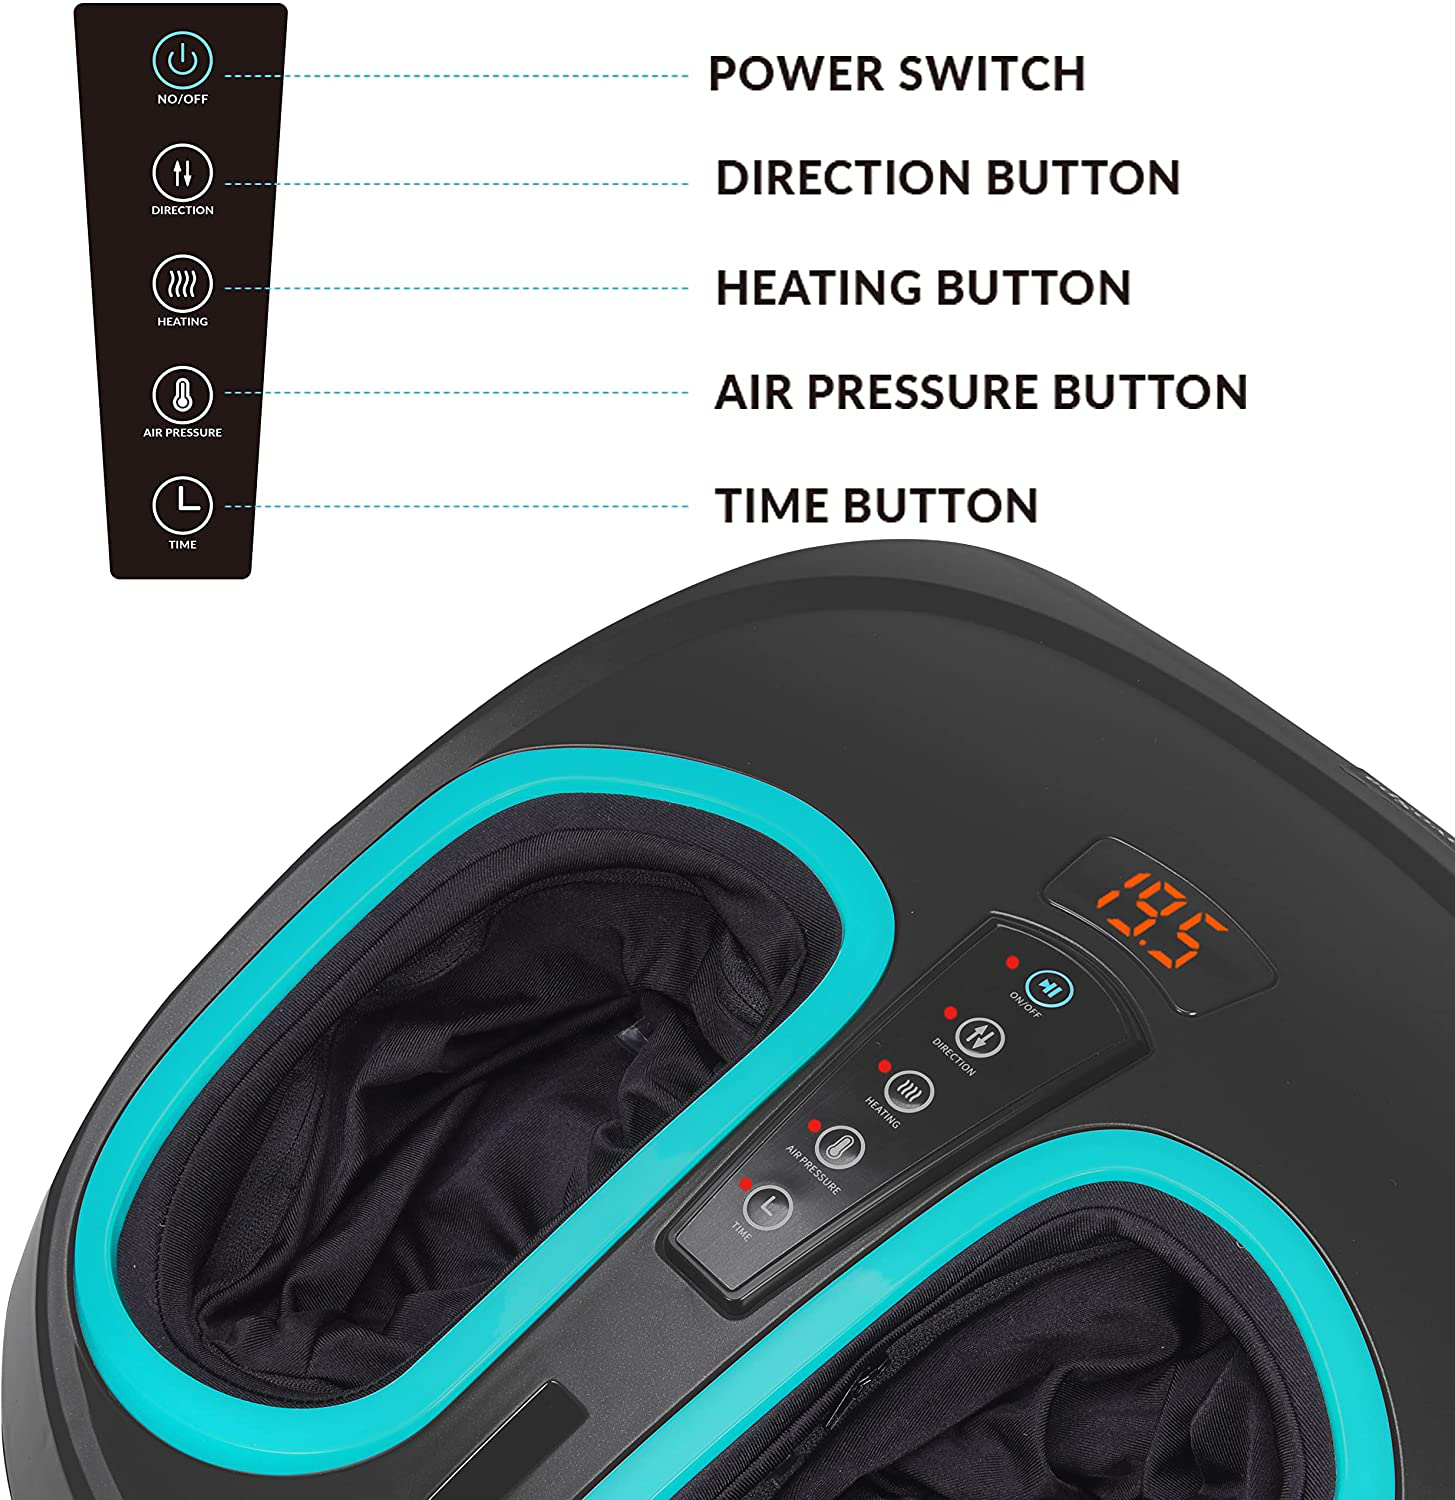 Shiatsu Foot Massager Machine with Heat - Electric Deep Kneading Heated Foot Massage Air Compression - Circulation, Legs, Plantar Fasciitis, Neuropathy Pain Therapy Spa Feet Massager Stocking Stuffers